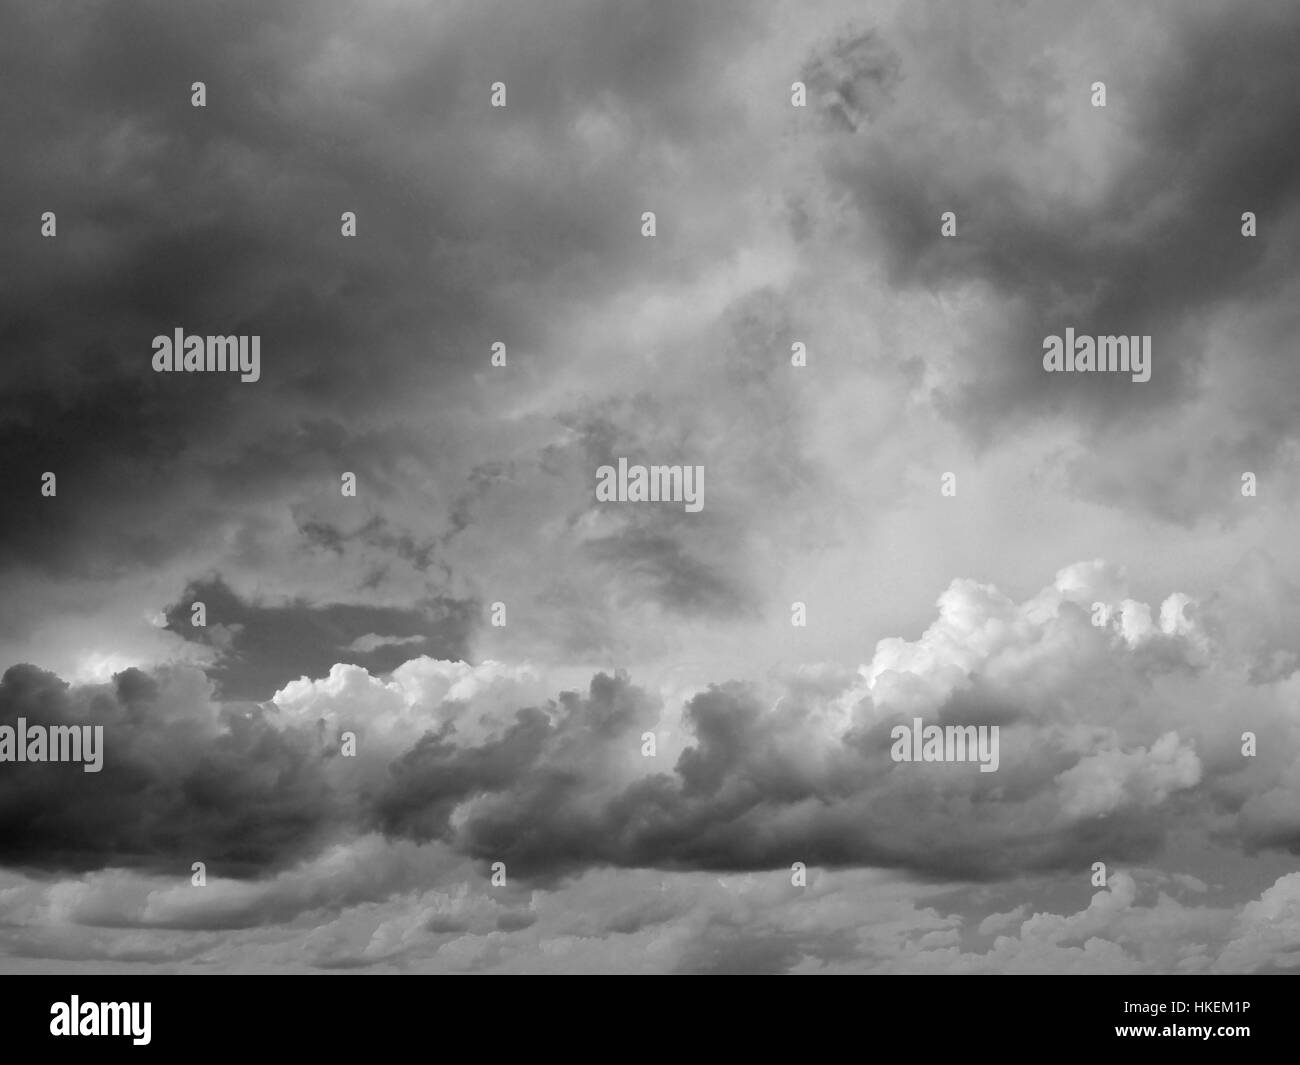 Dunkle Sturm Wolkengebilde beängstigend bewölktem Himmel Hintergrund. Sturm kommt. Stockfoto